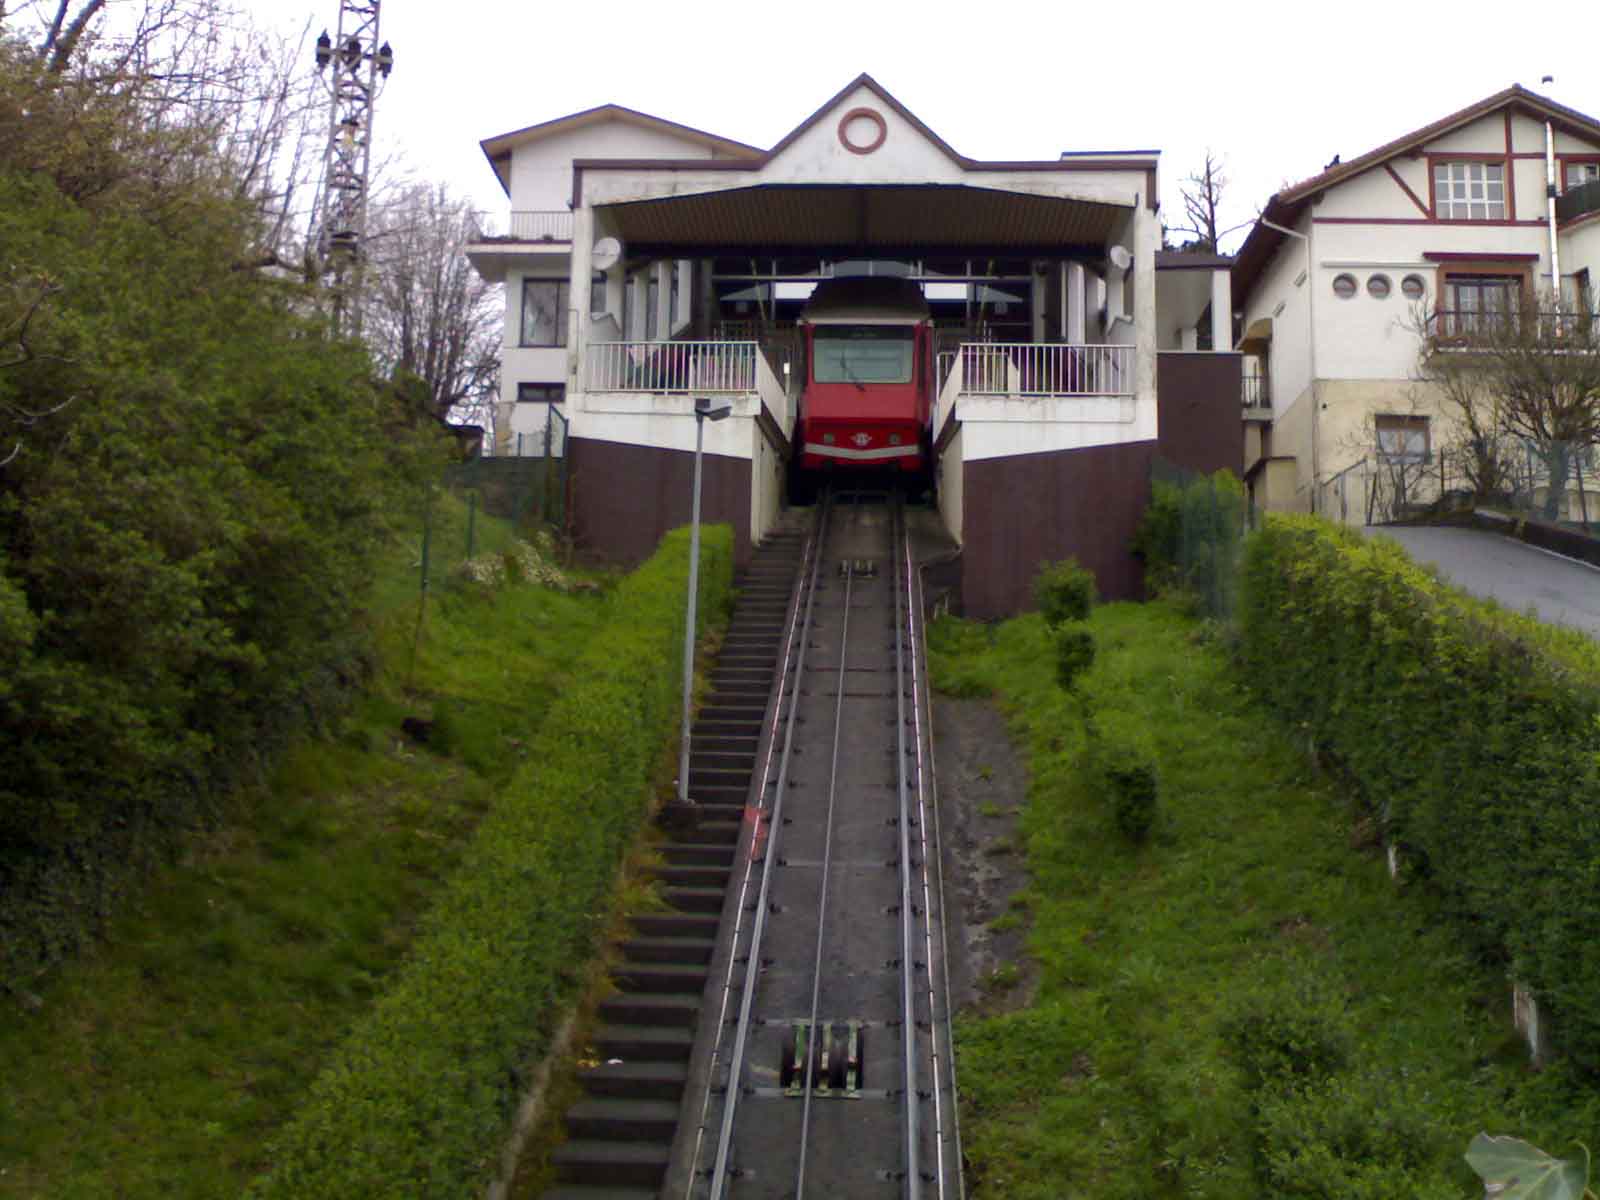 Bilbao Artxanda Funicular